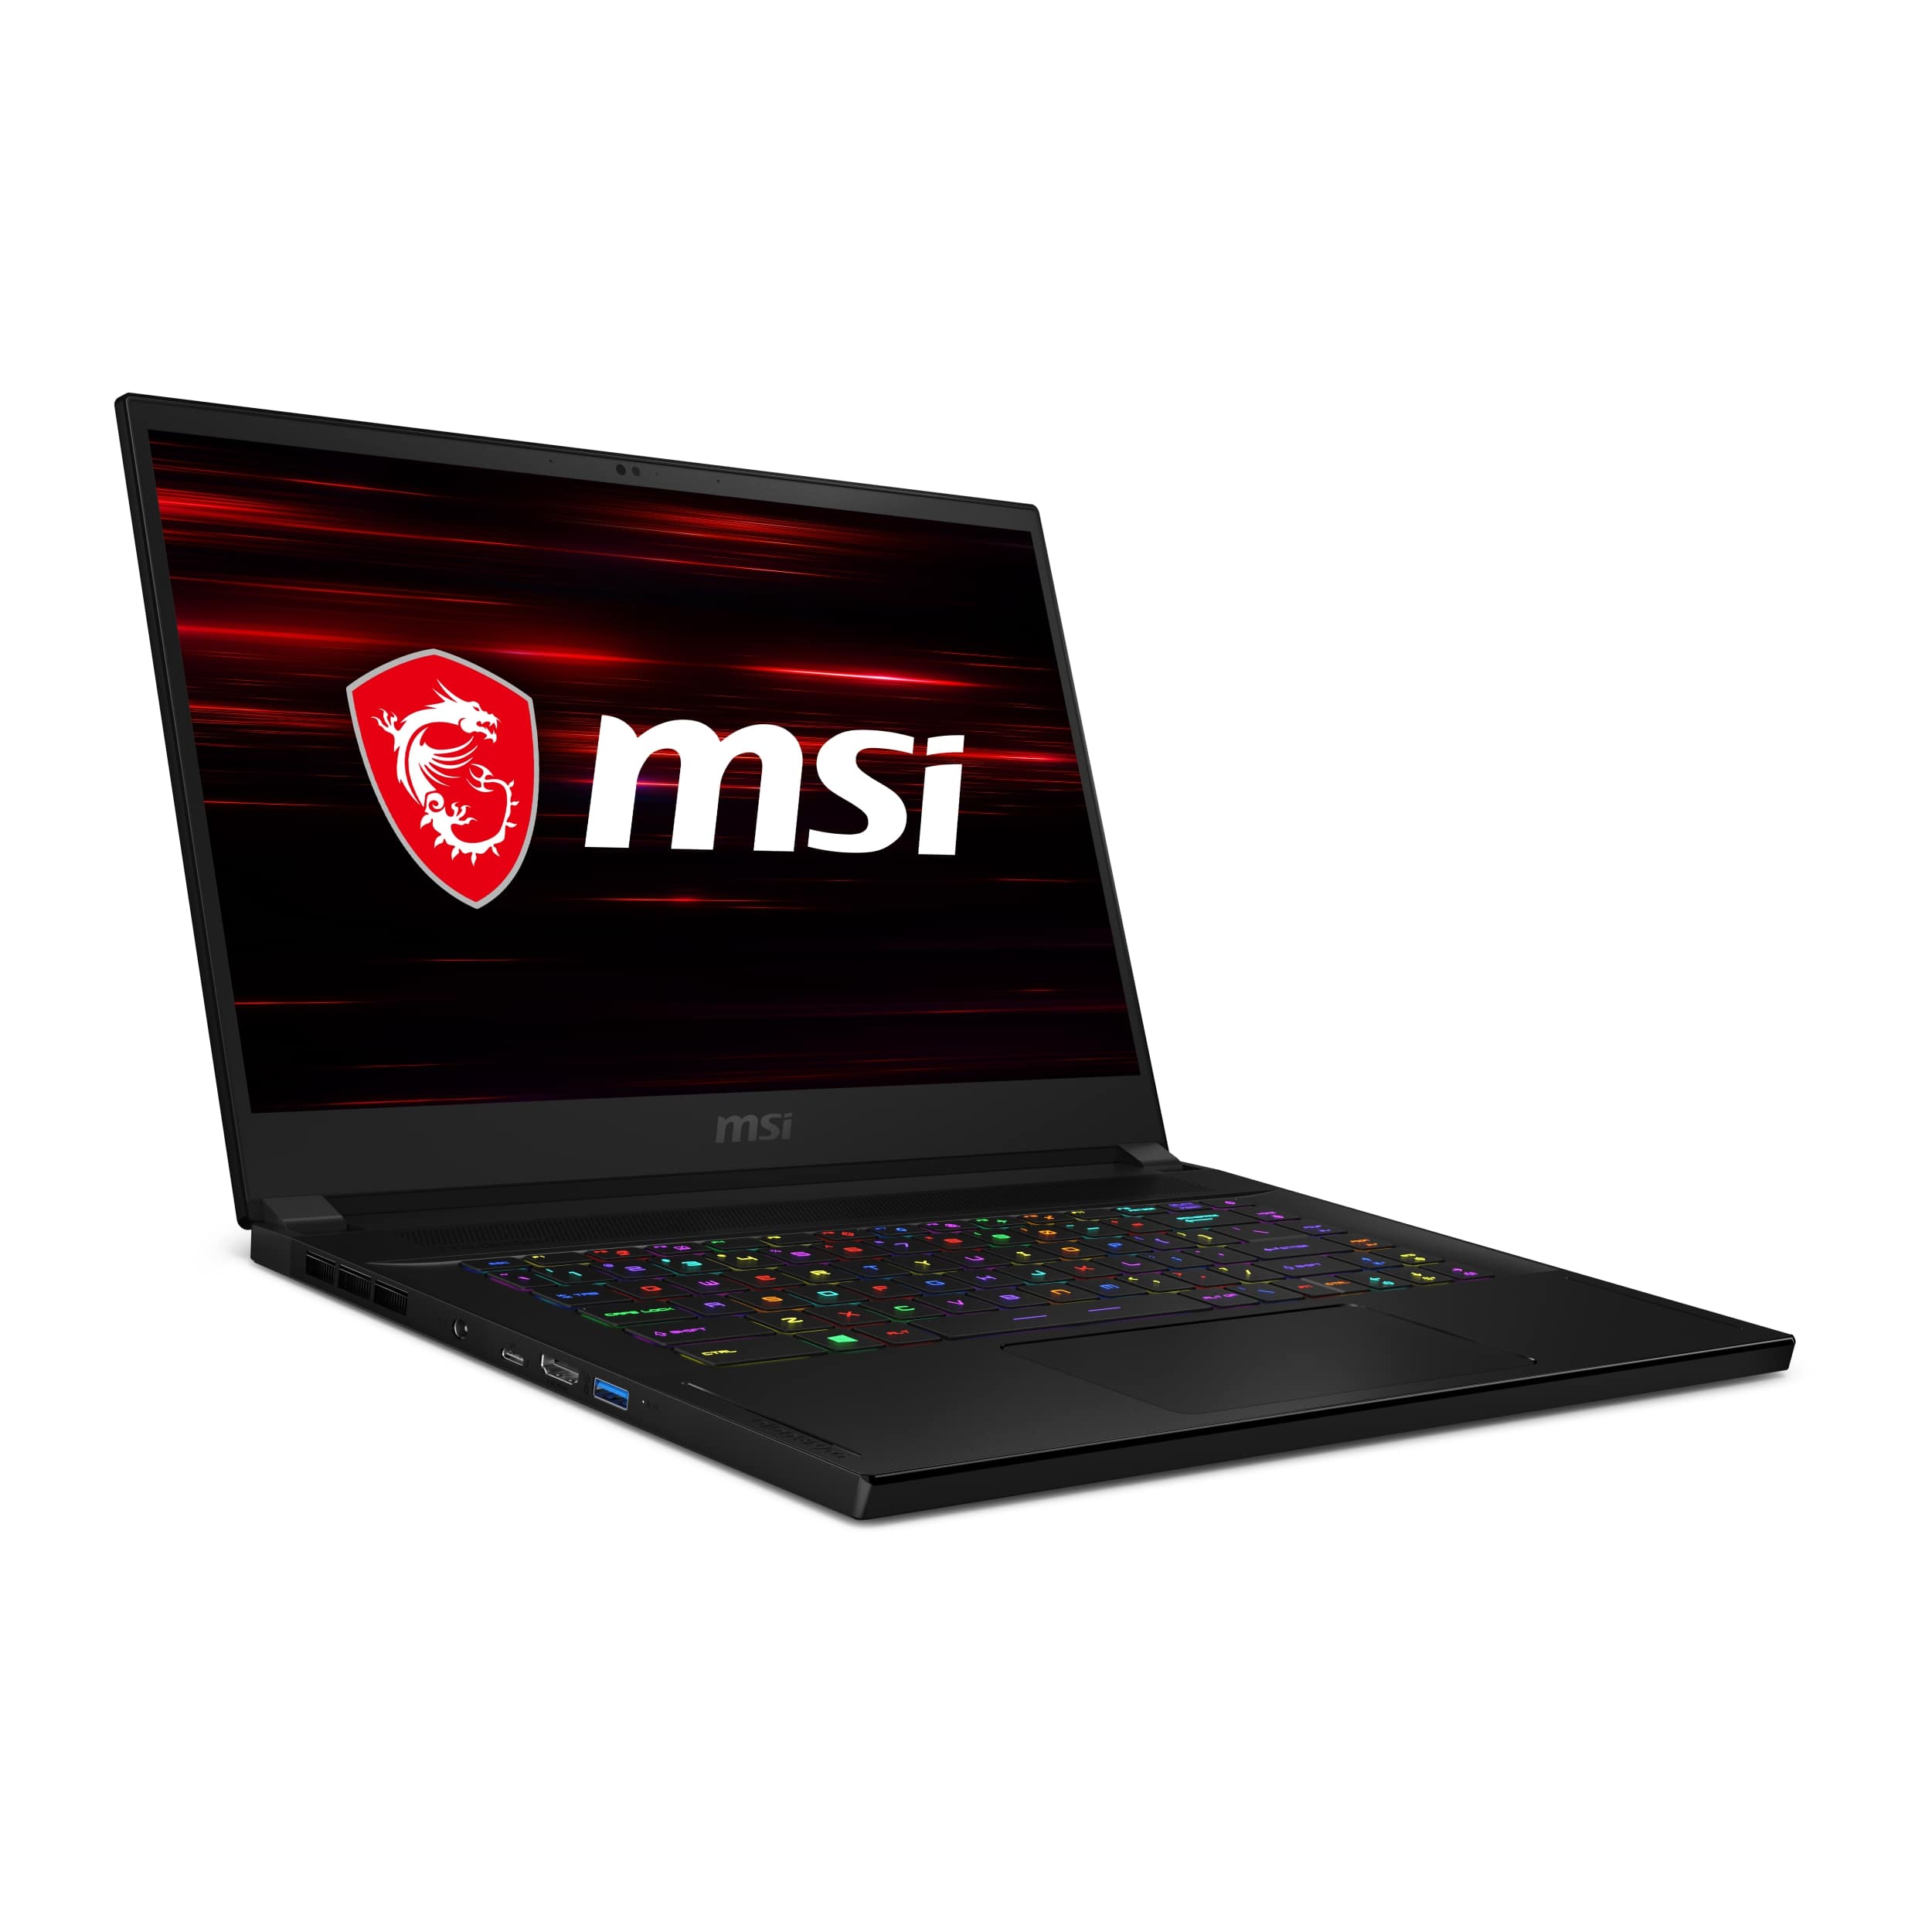 MSI GS66 Stealth 15.6" Gaming Laptop - Intel Core i7-10750H - 16GB - 512GB SSD - NVIDIA GeForce RTX2060 - Windows 10 Pro - Core Black - image 5 of 5